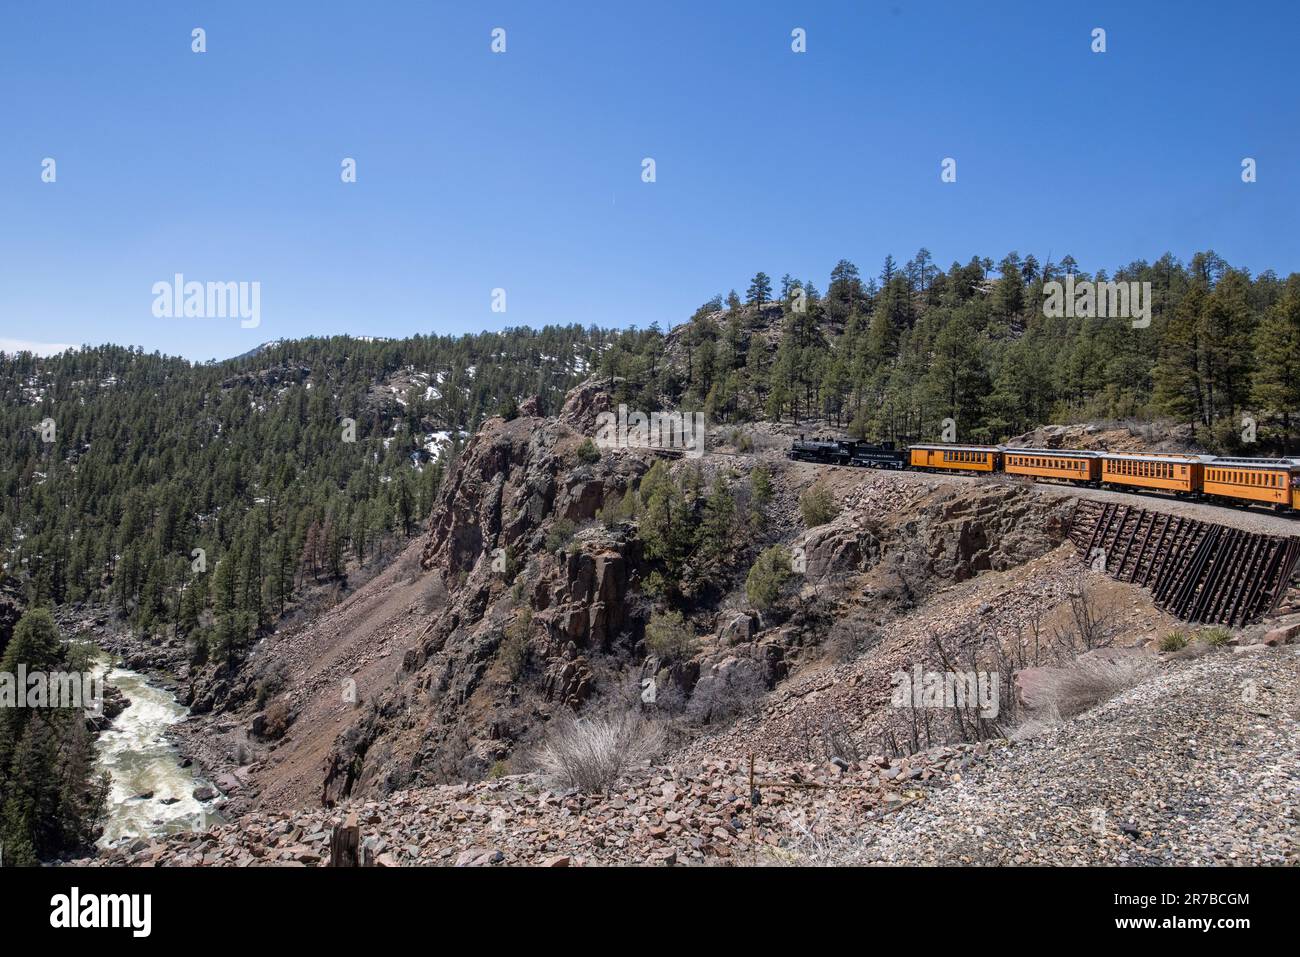 Durango & Silverton Narrow Gauge Railroad transporting passengers through the mountain landscape of the San Juan National Forest in Colorado. Stock Photo